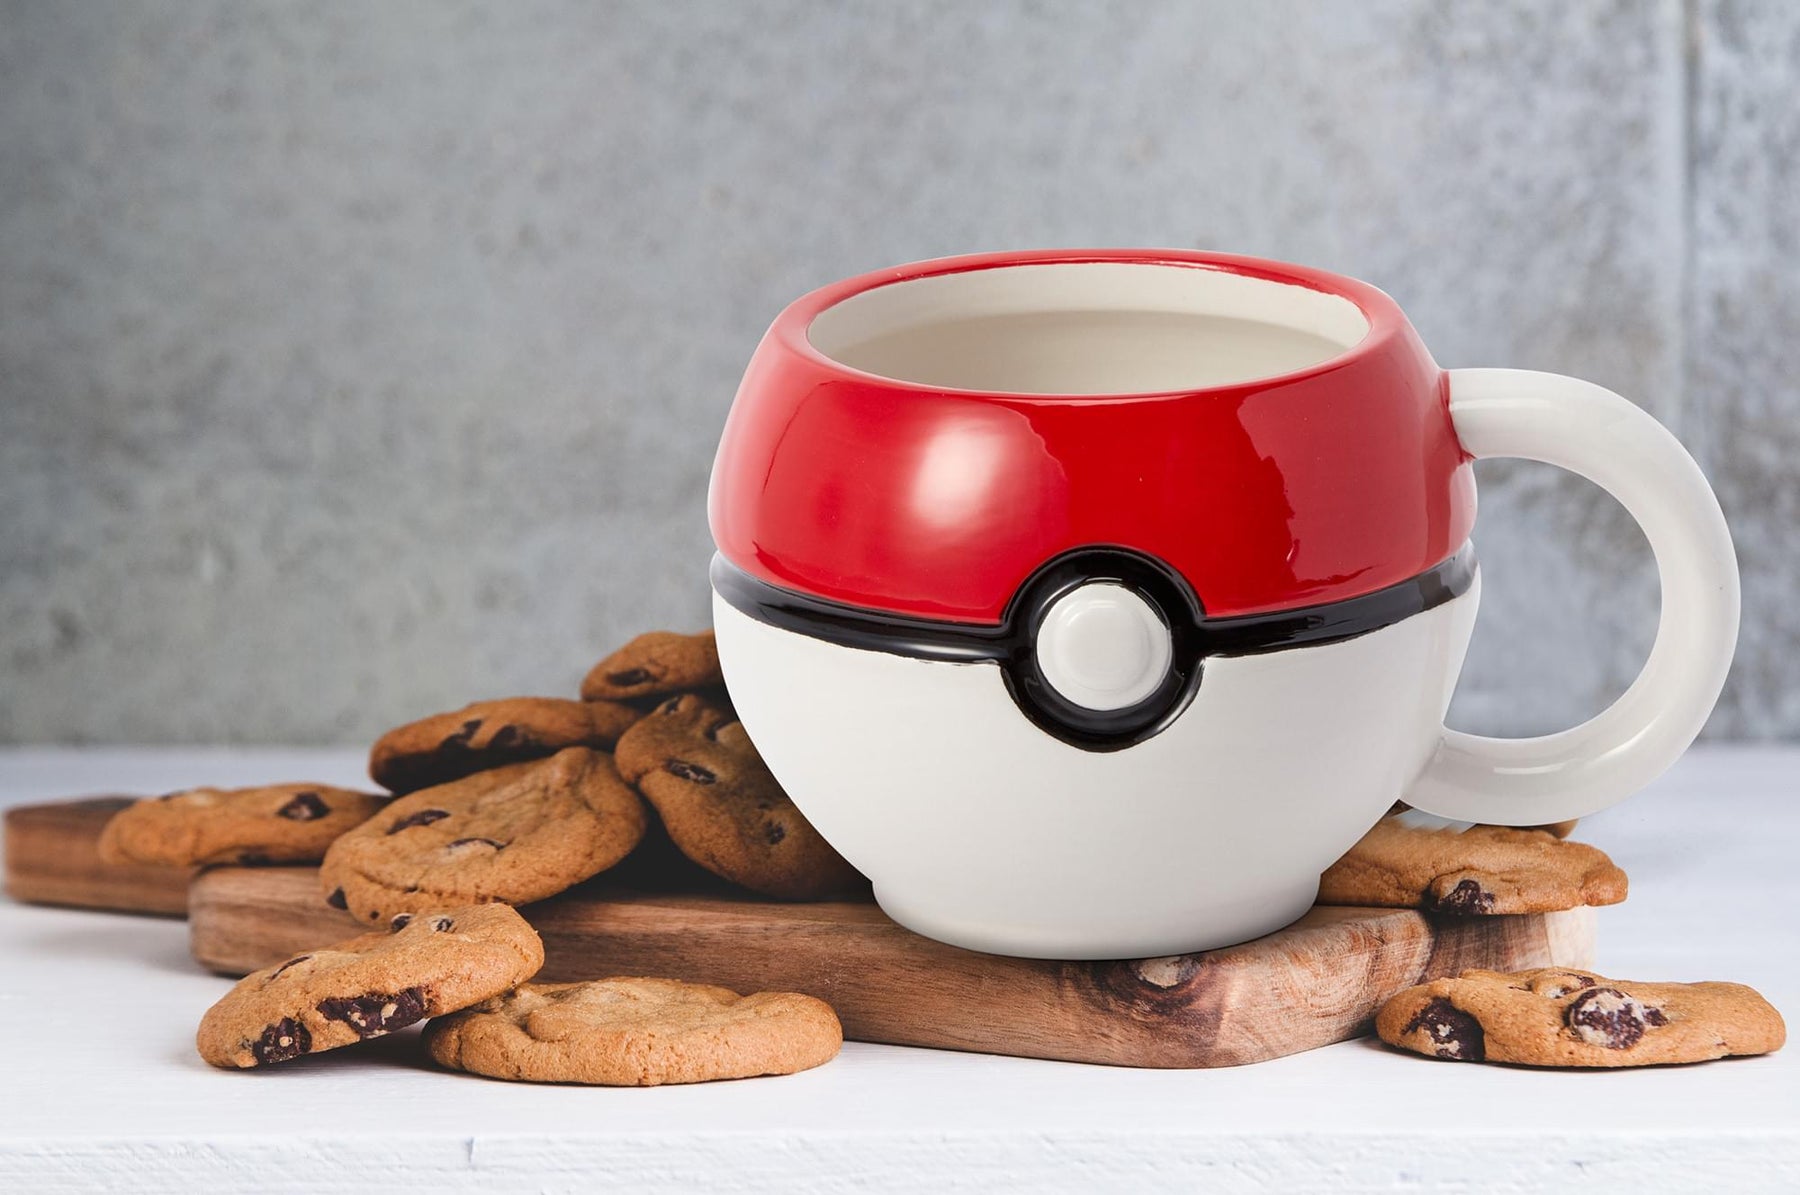 Pokemon Pokeball Ceramic Coffee Mug with Lid